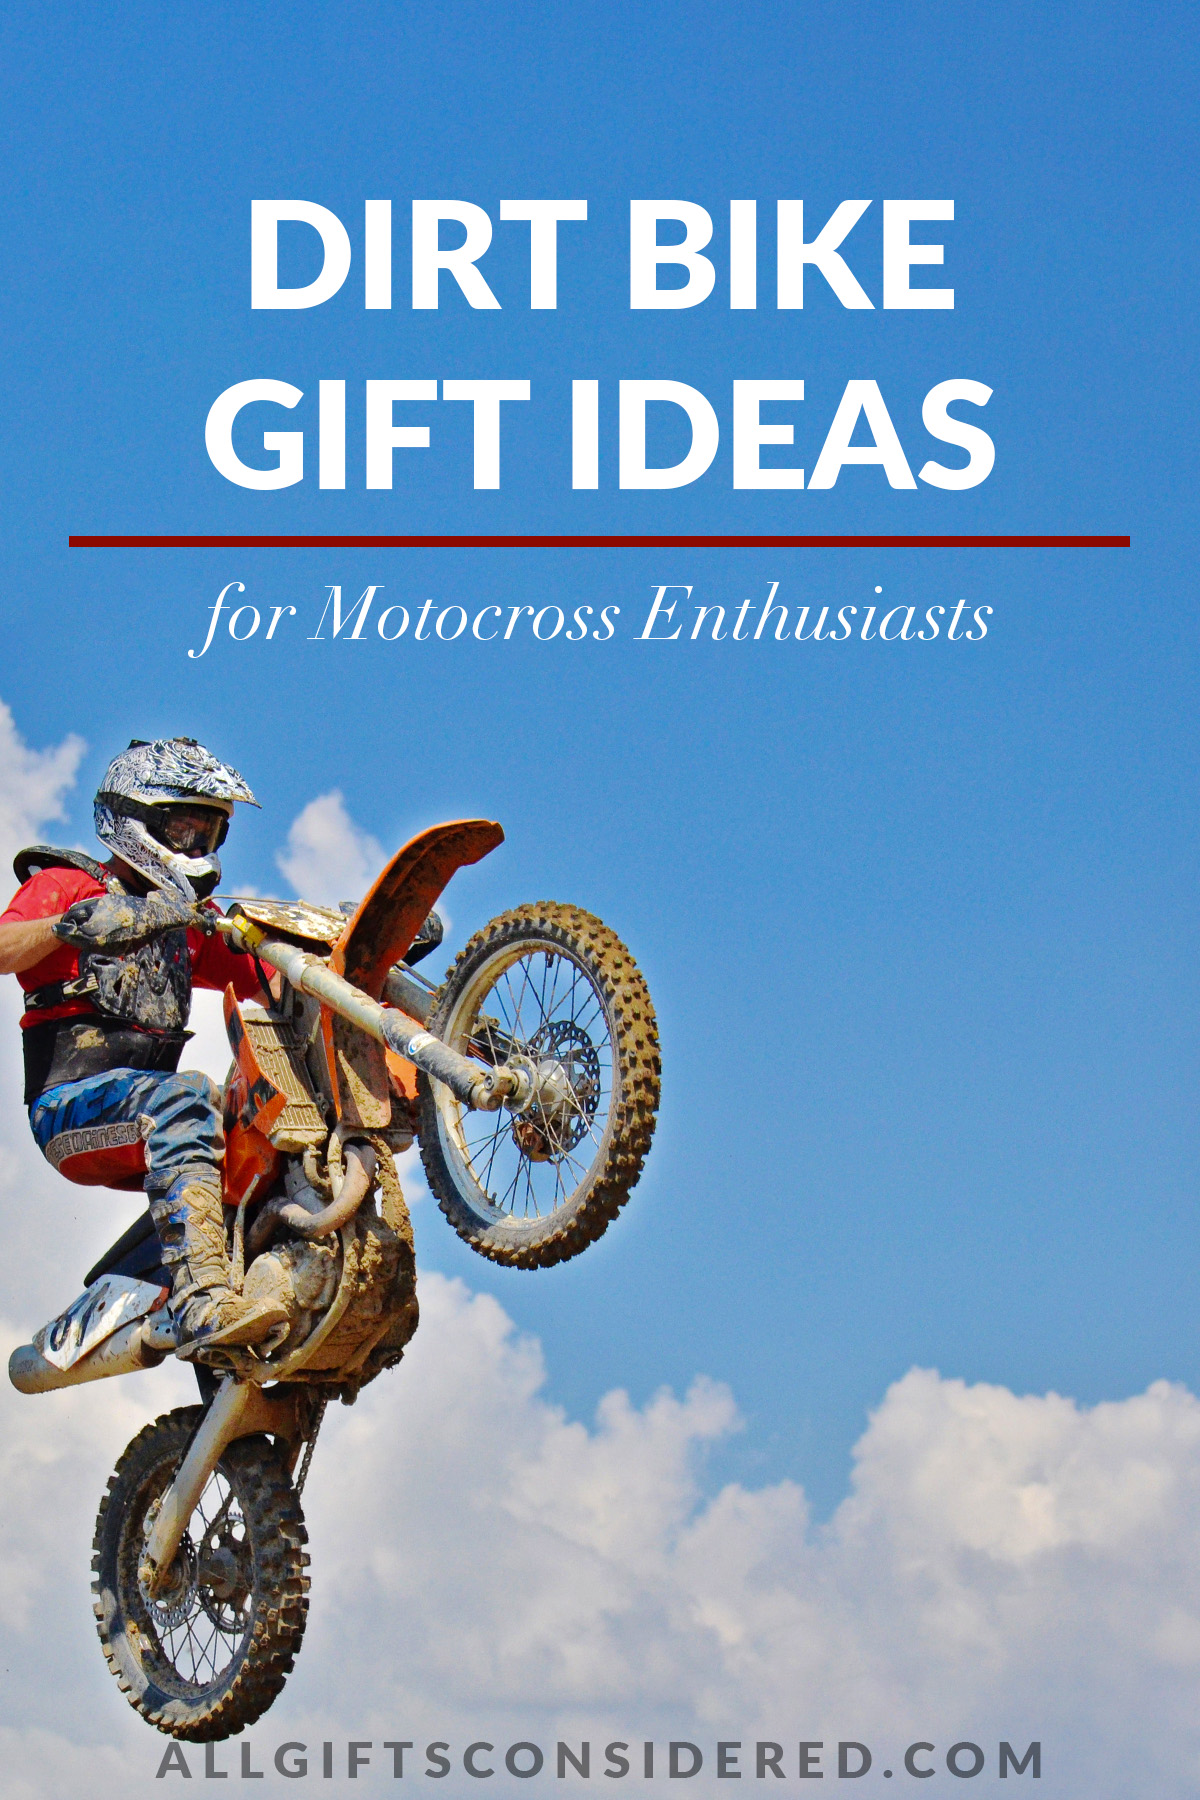 dirt bike gift ideas - feature image